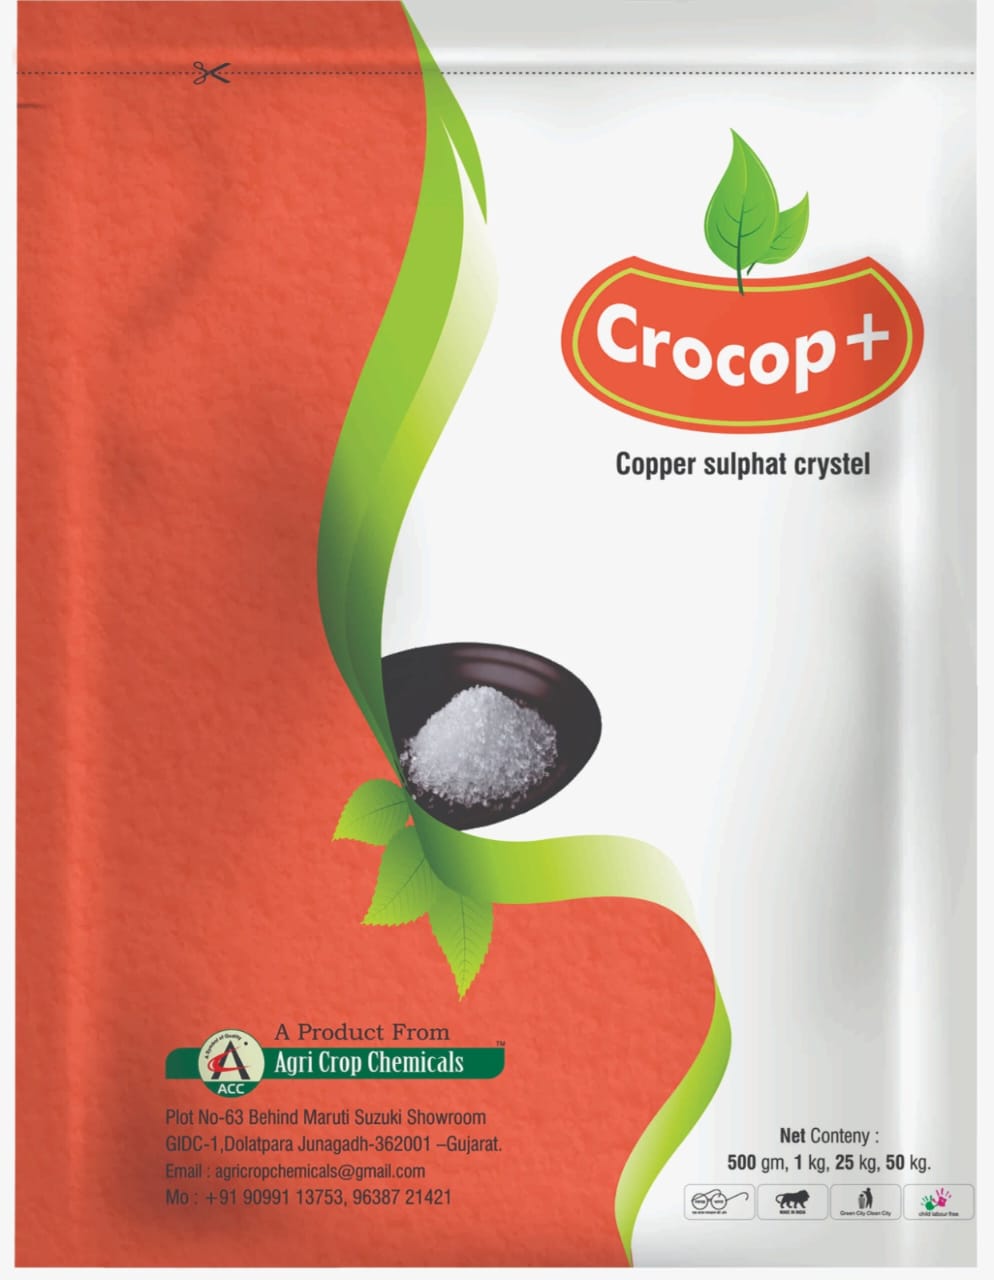 Water Soluble Fertilizer Copper sulphat crystel Crocop+ Weight - 1 Kg